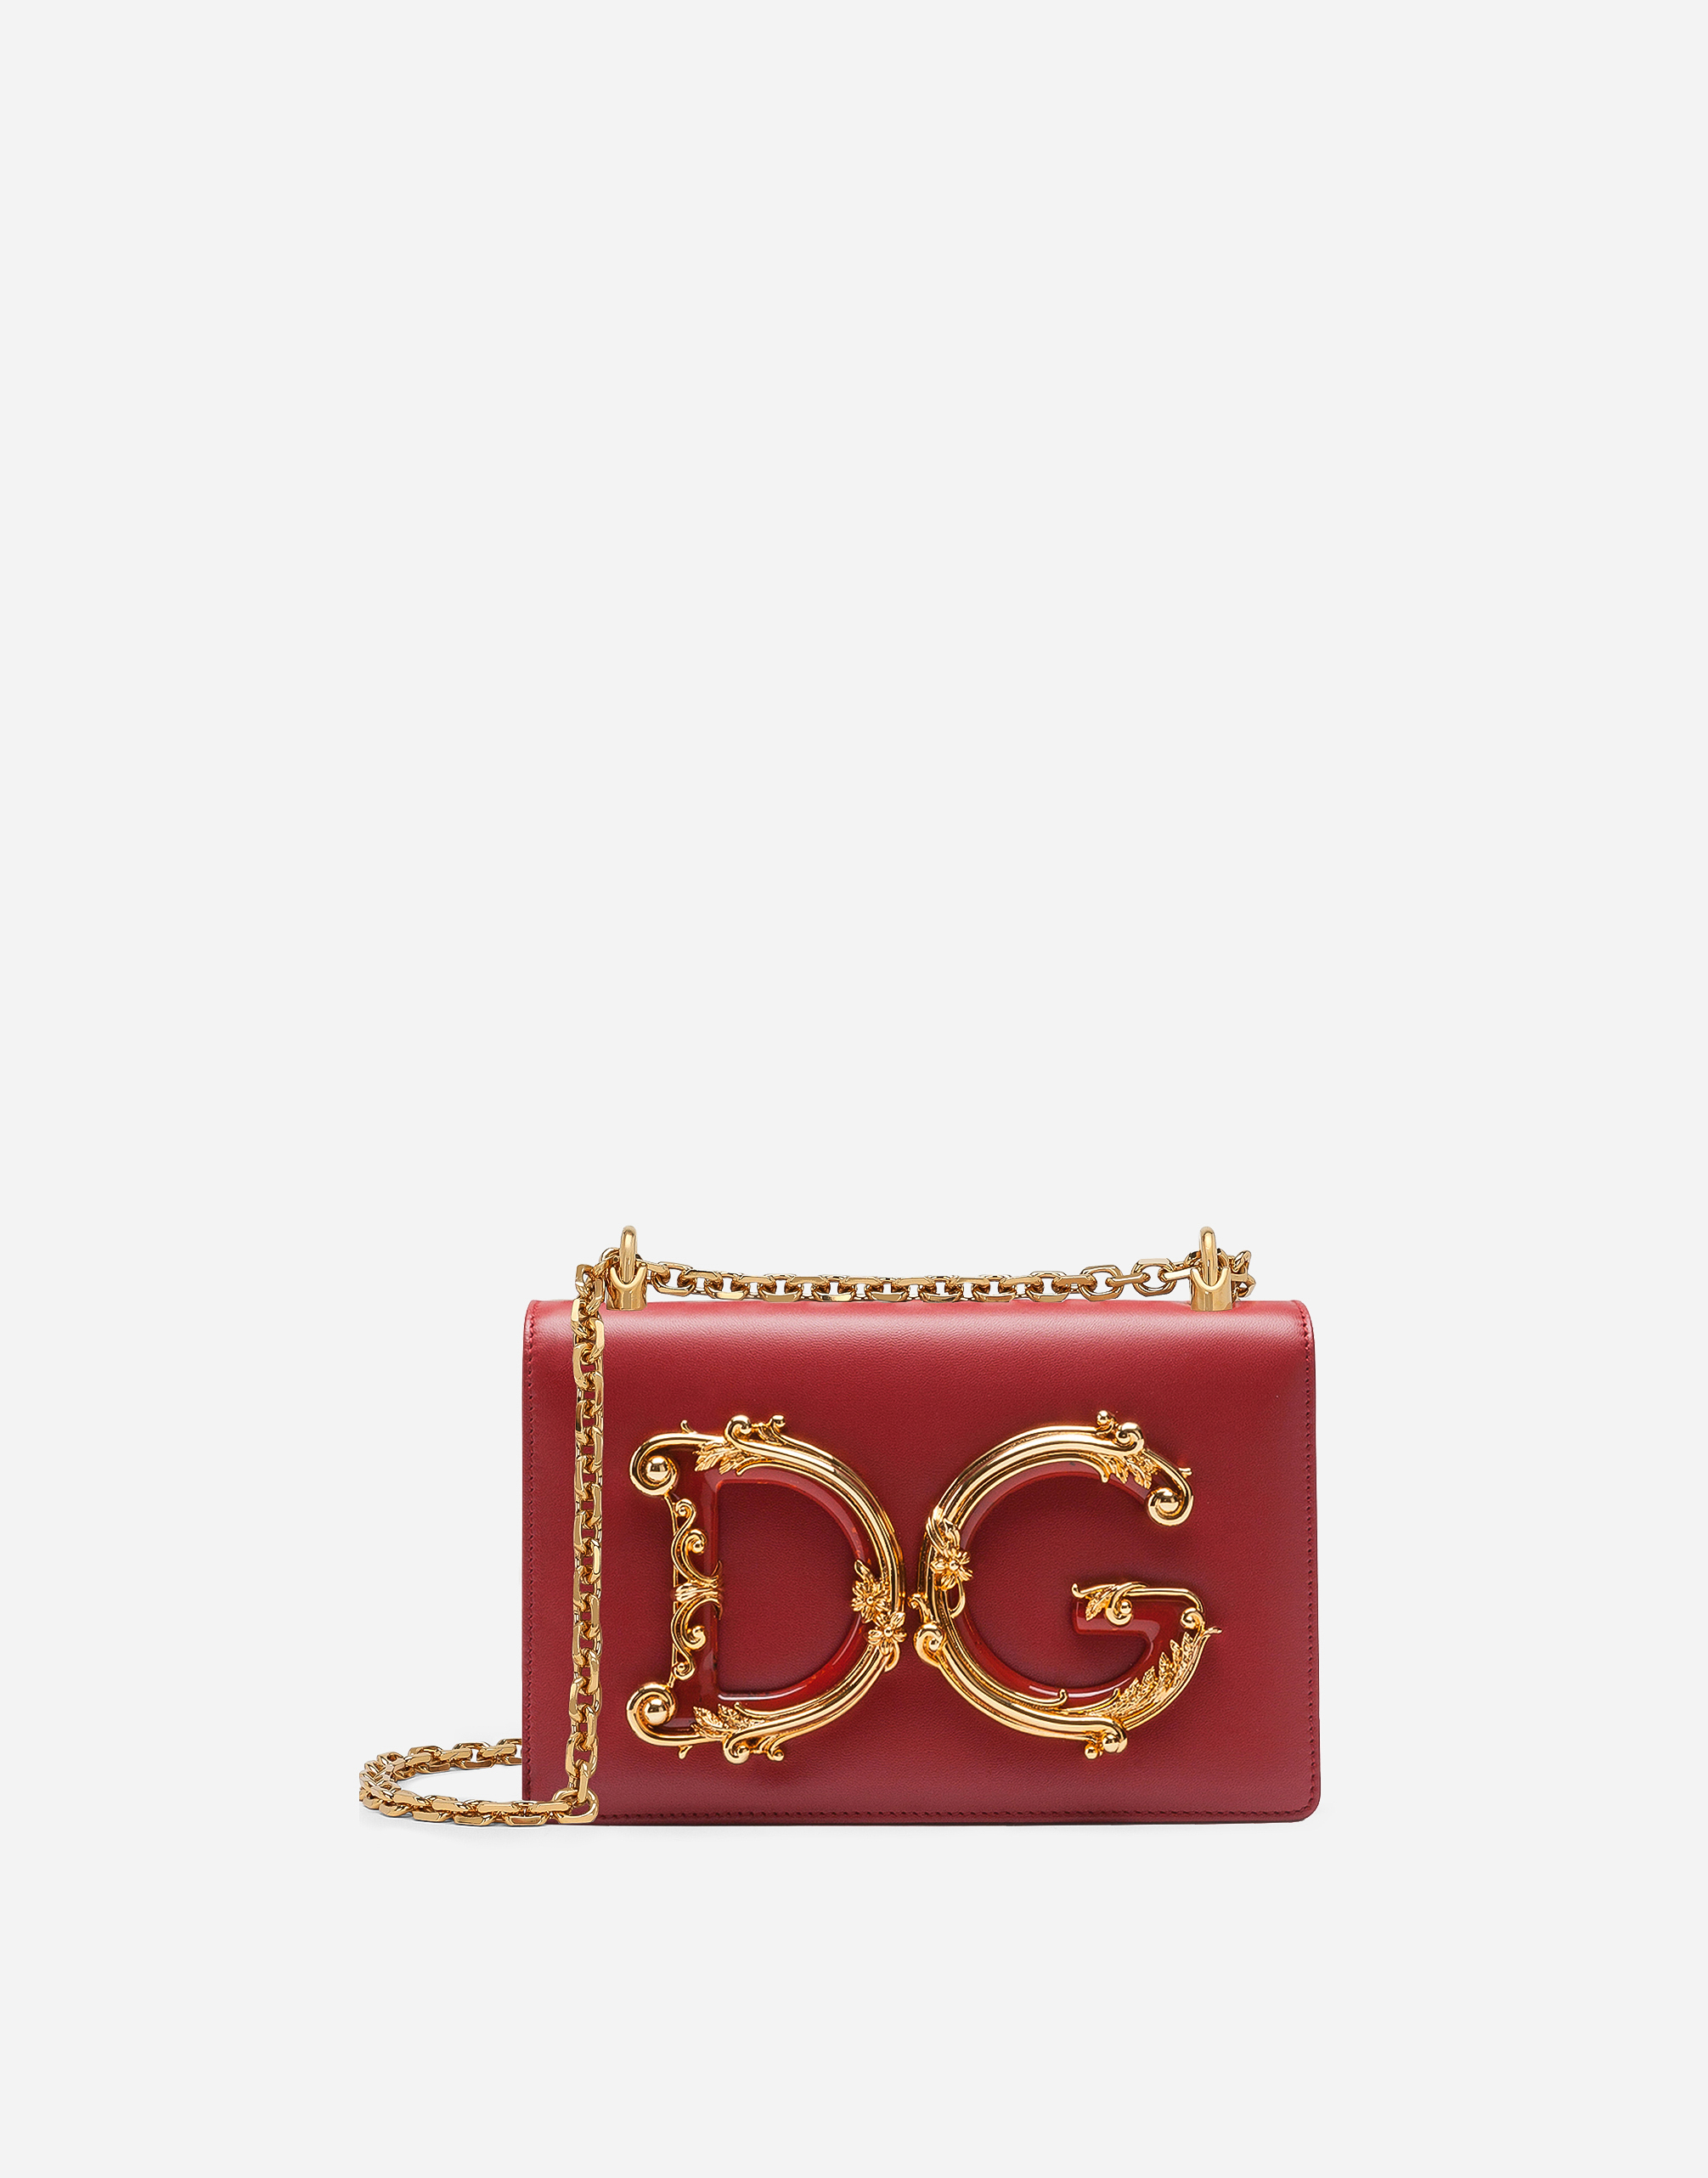 DG Girls shoulder bag in nappa leather in Red